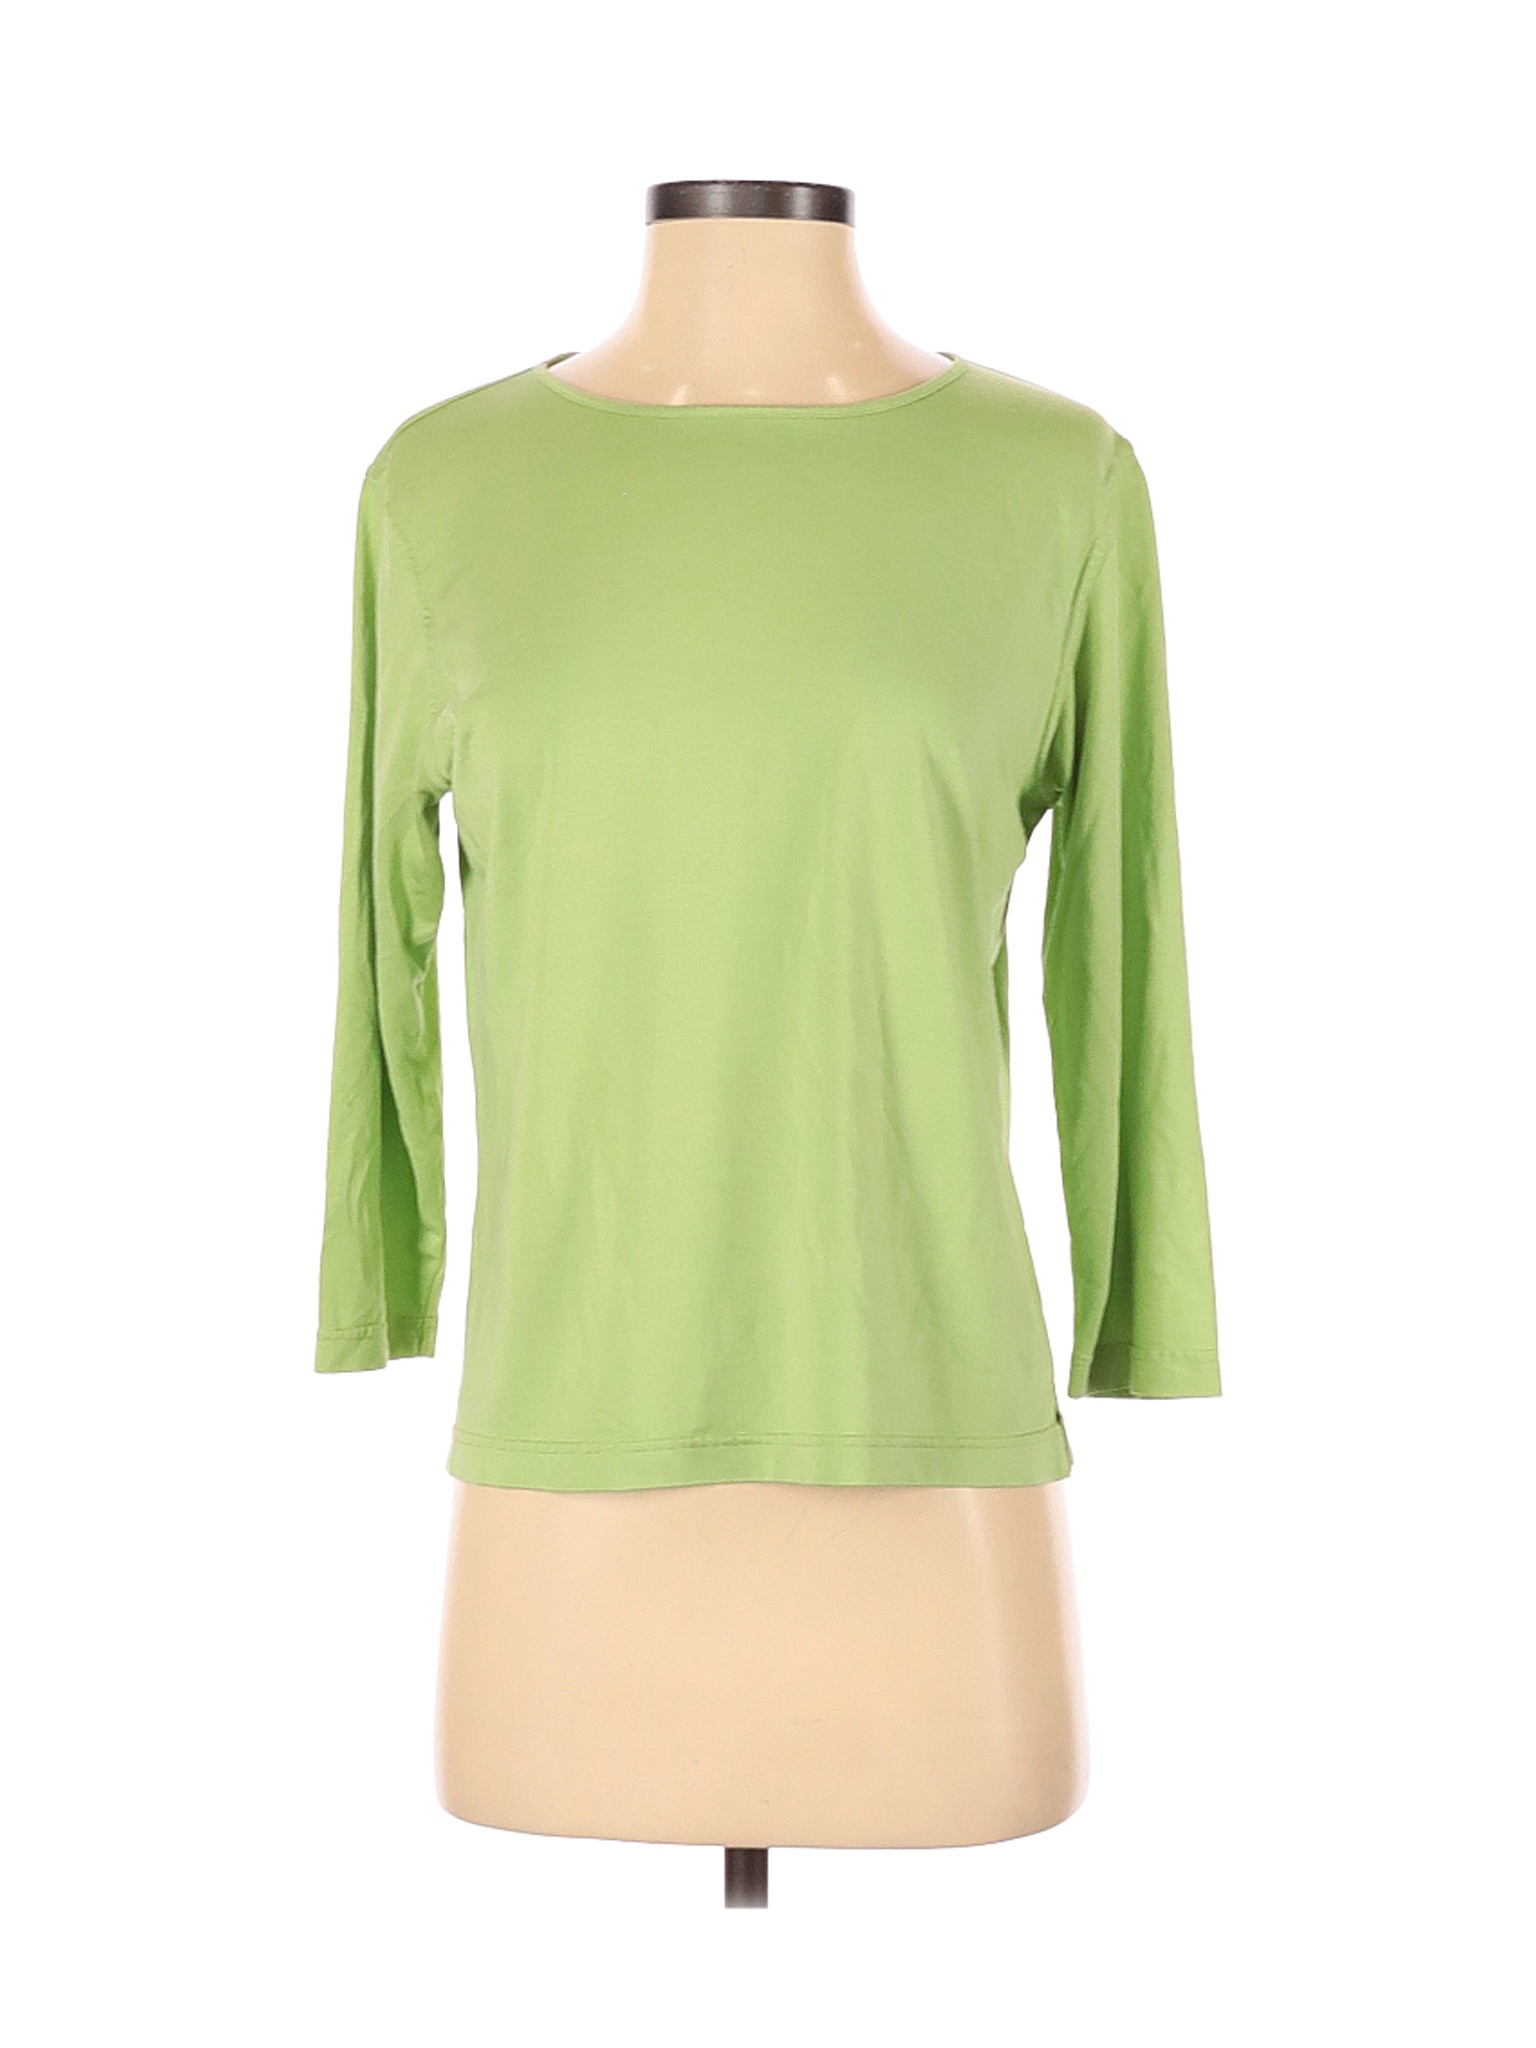 Coldwater Creek Women Green 3/4 Sleeve Silk Top S | eBay